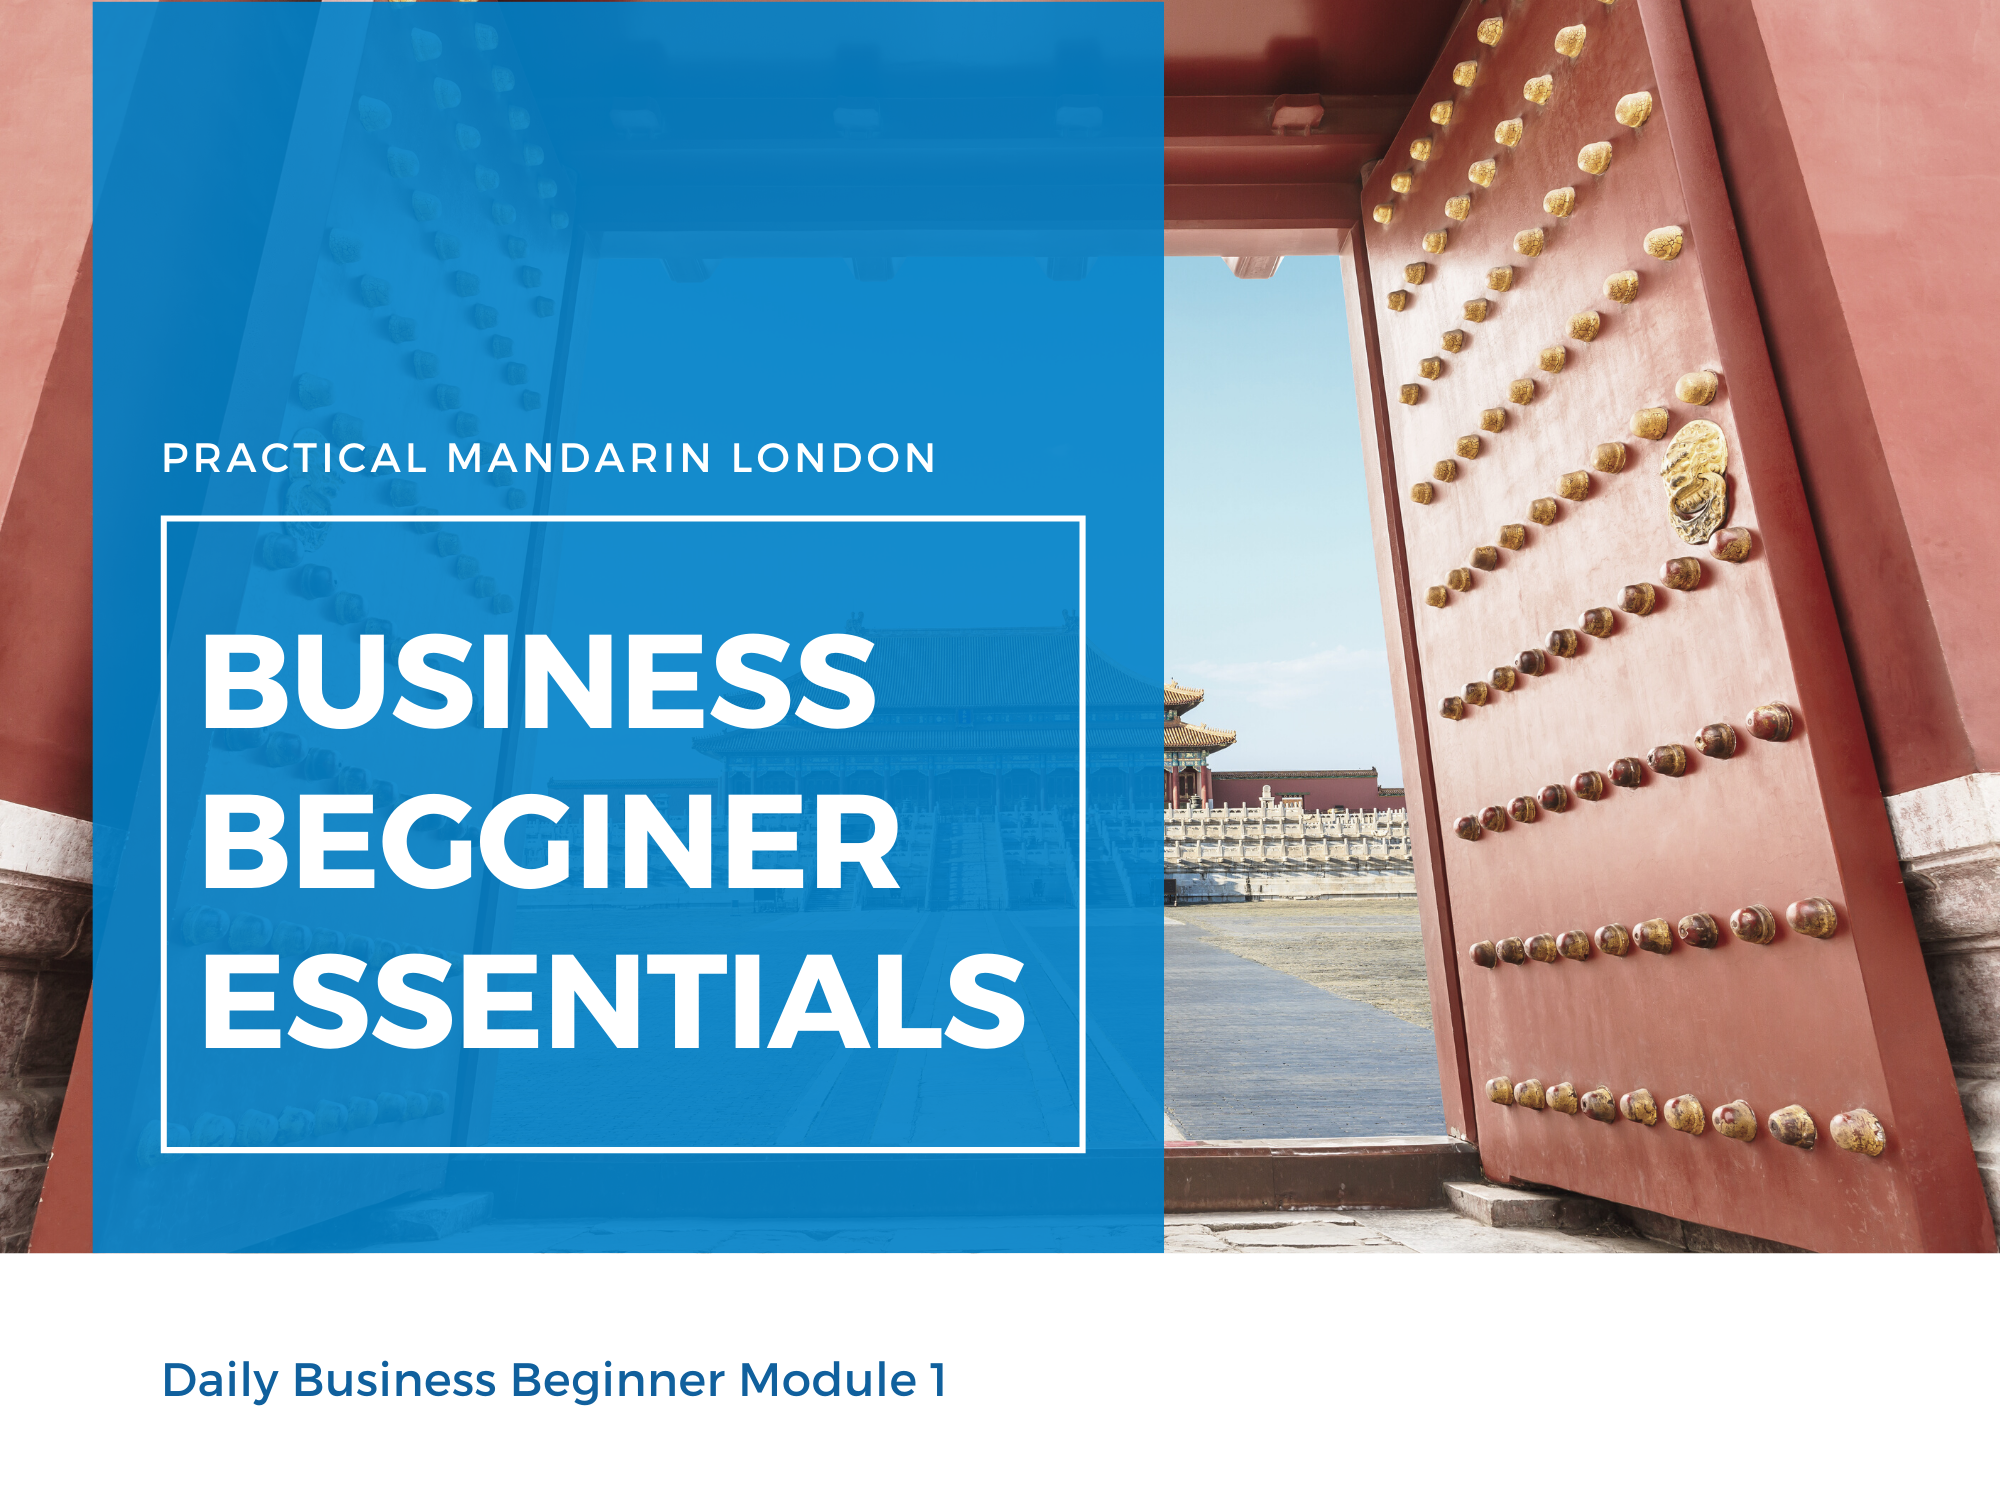 Practical Mandarin Cover image of daily business mandarin beginner module 1